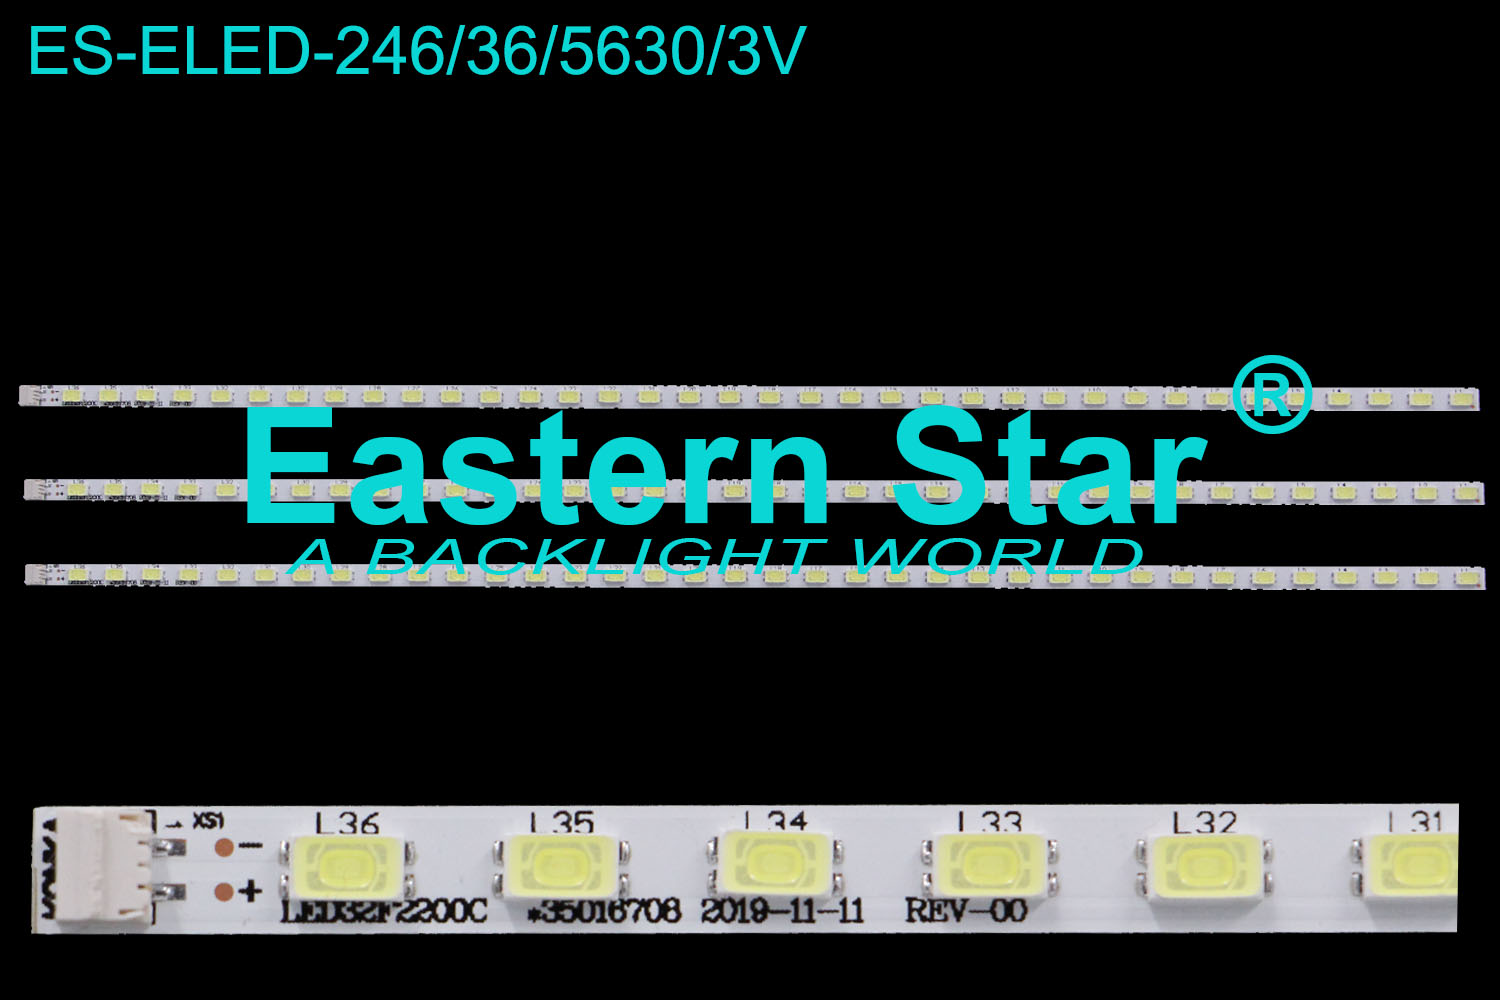 ES-ELED-246 ELED/EDGE TV backlight 32'' 36LEDs use for Konka LED32F2200C *35016708 2019-11-11 REV-00 LED STRIPS(2)